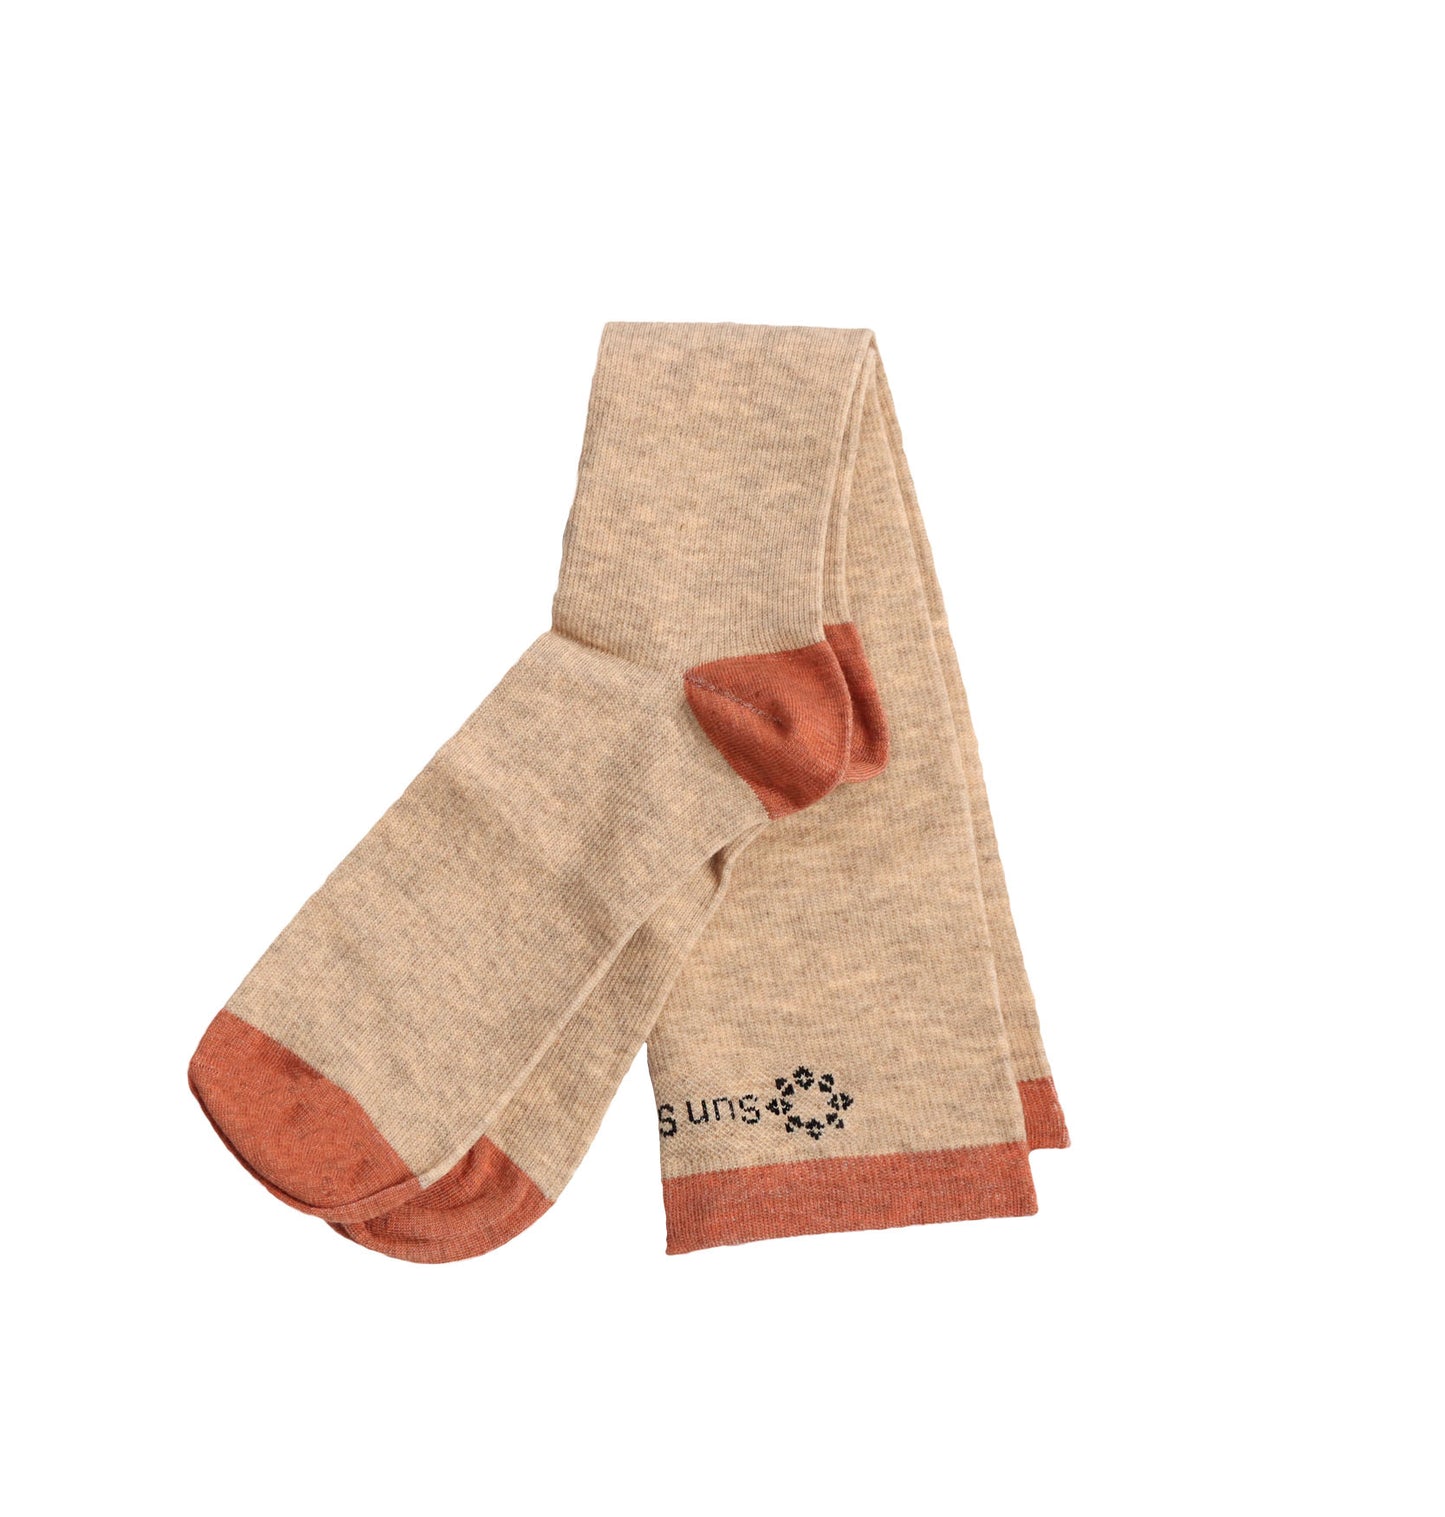 Under-Socks (Copper Compression) - Pair